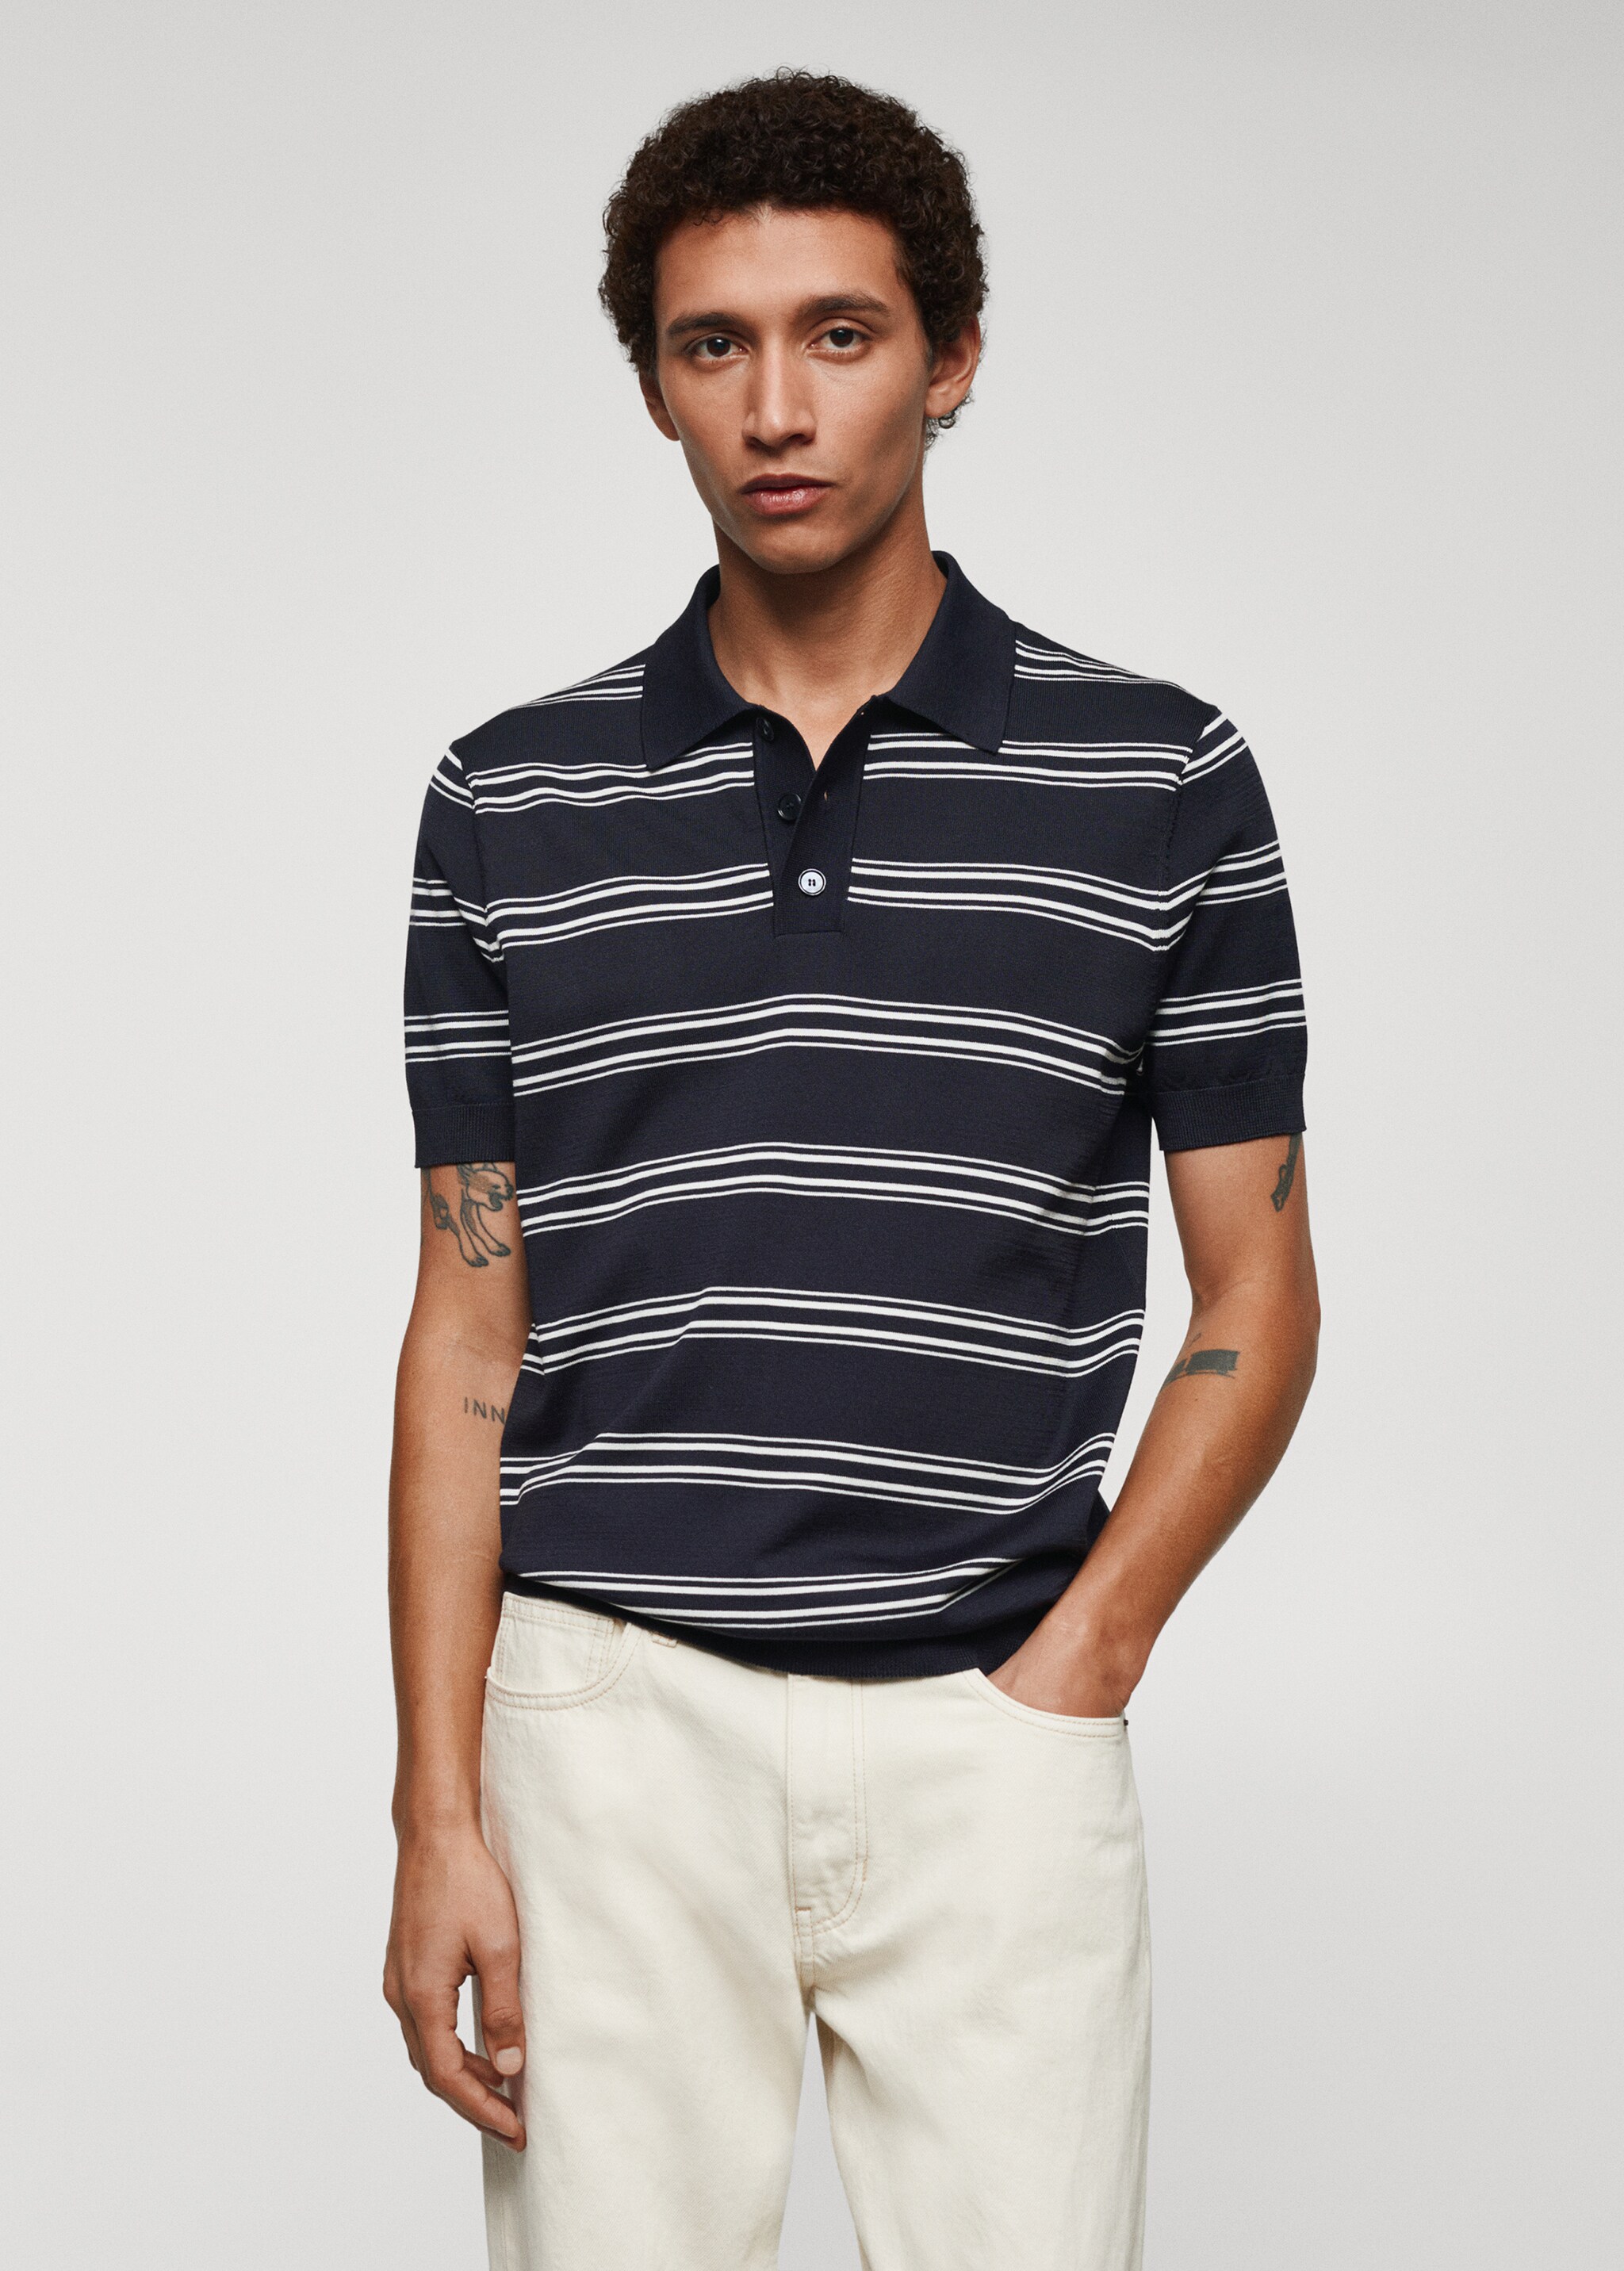 Striped jersey polo shirt - Medium plane